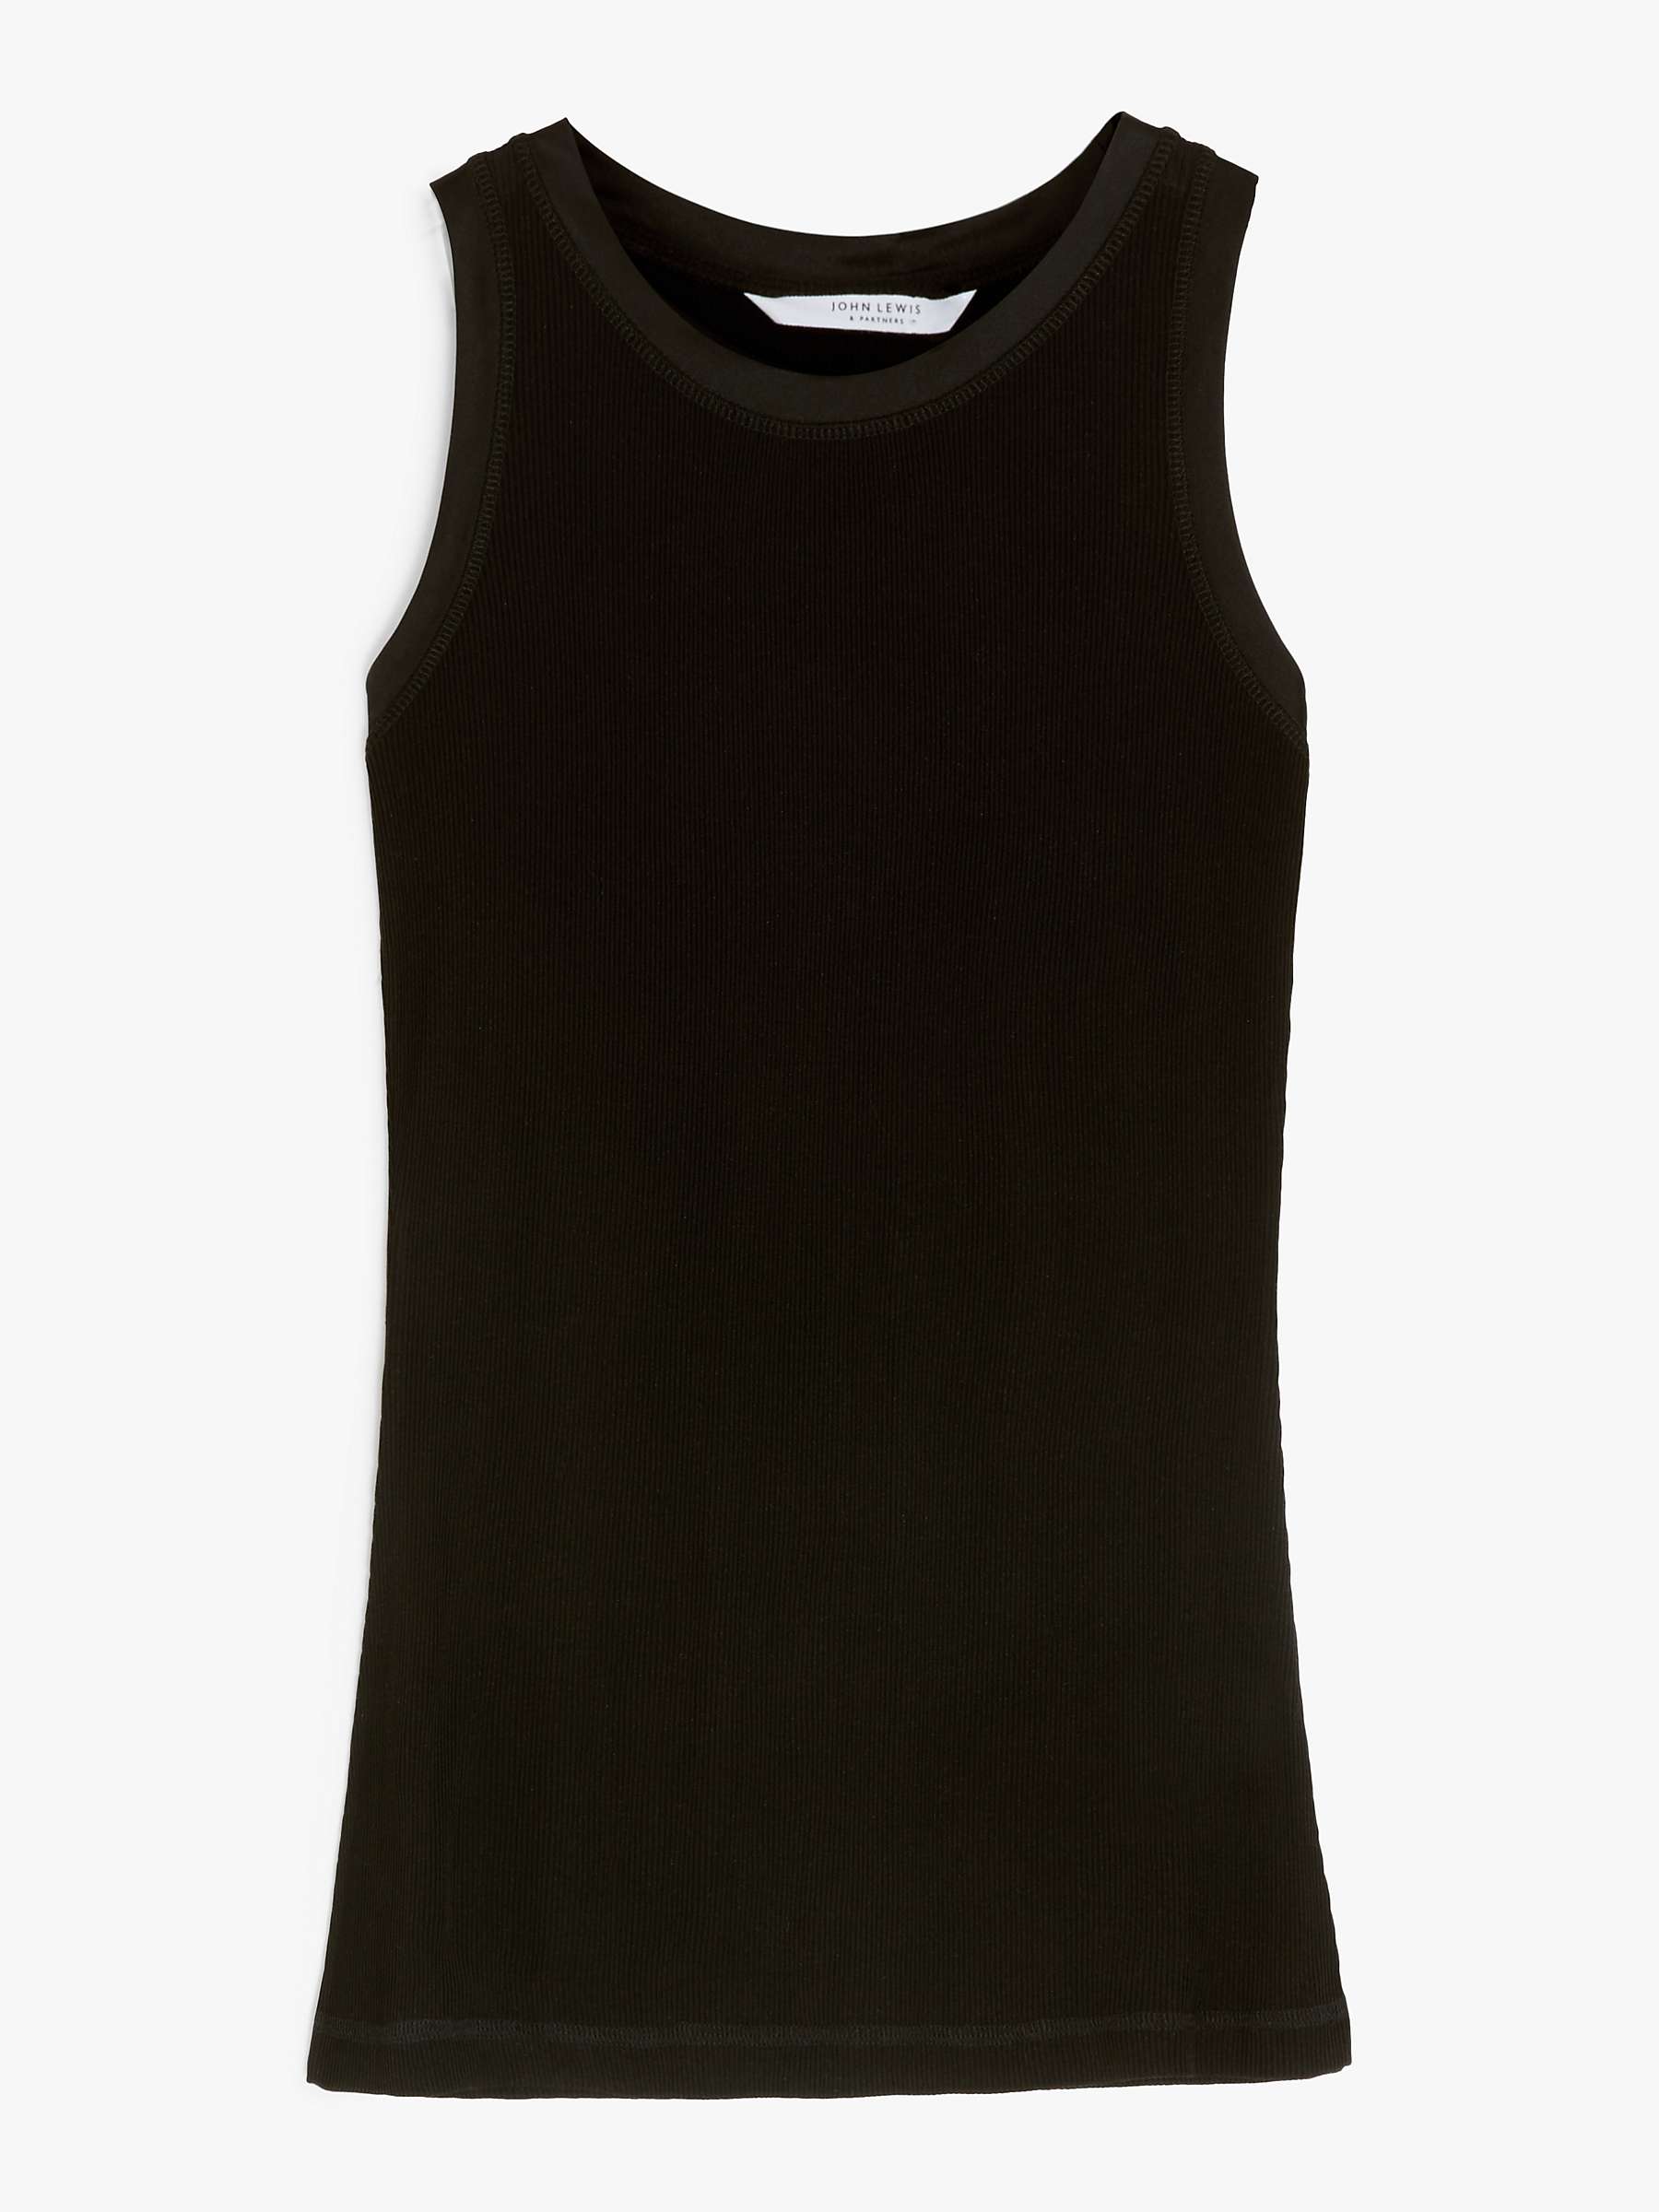 John Lewis & Partners Silk Thermal Vest, Black at John Lewis & Partners